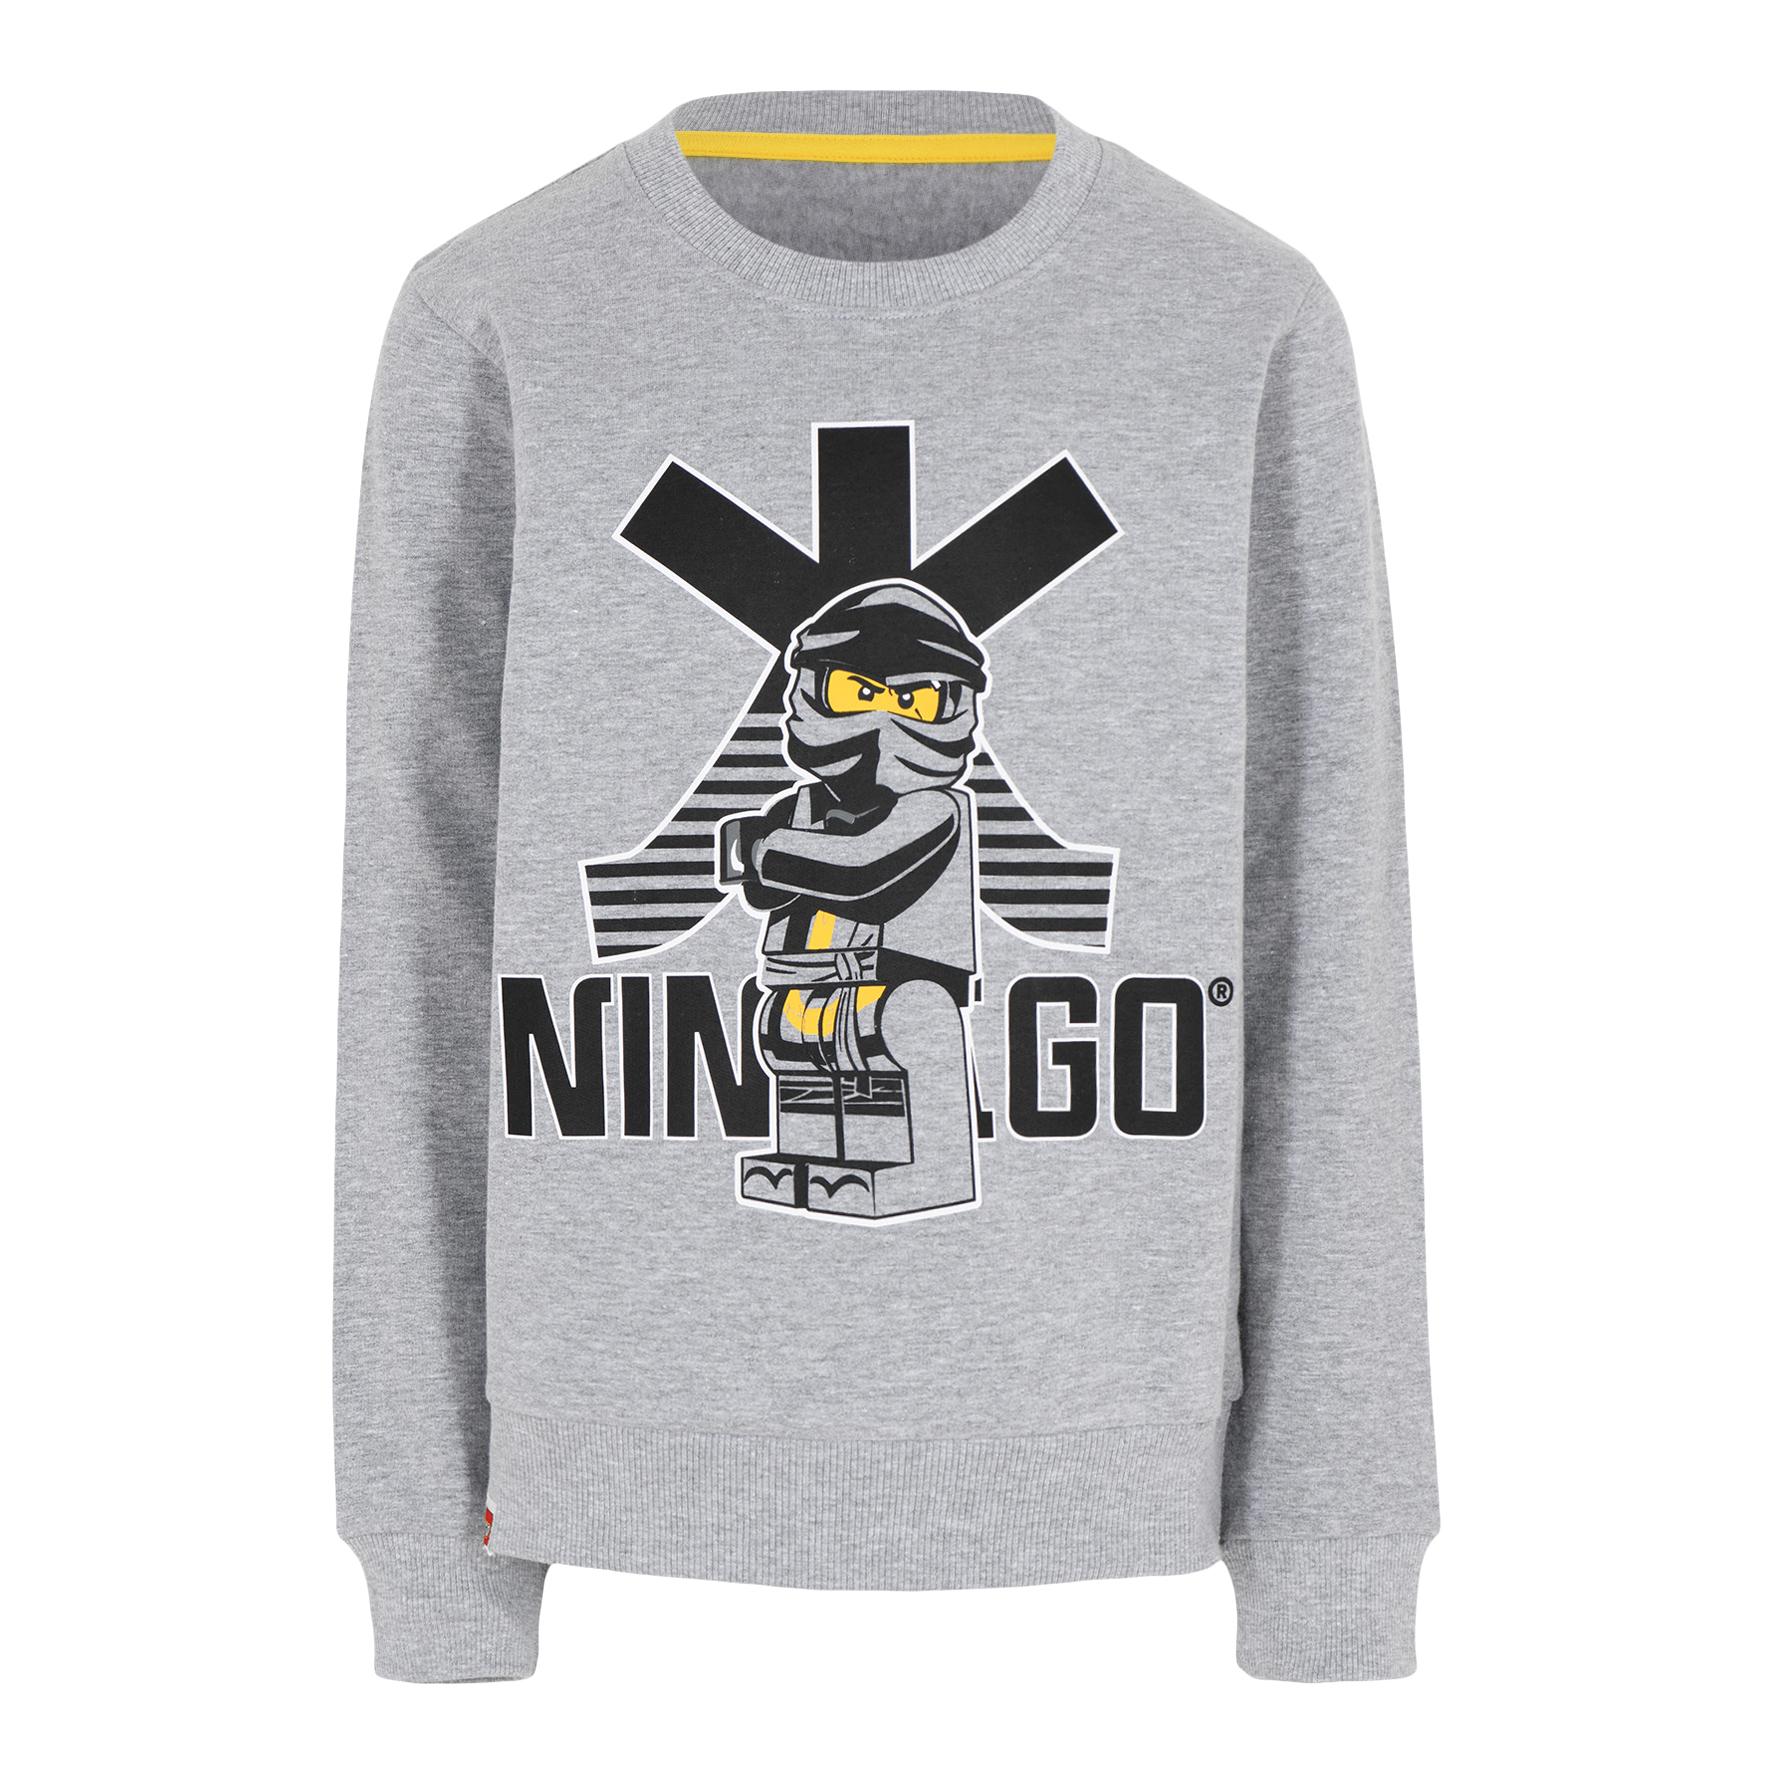 Lego sweater Ninjago grijs/zwart